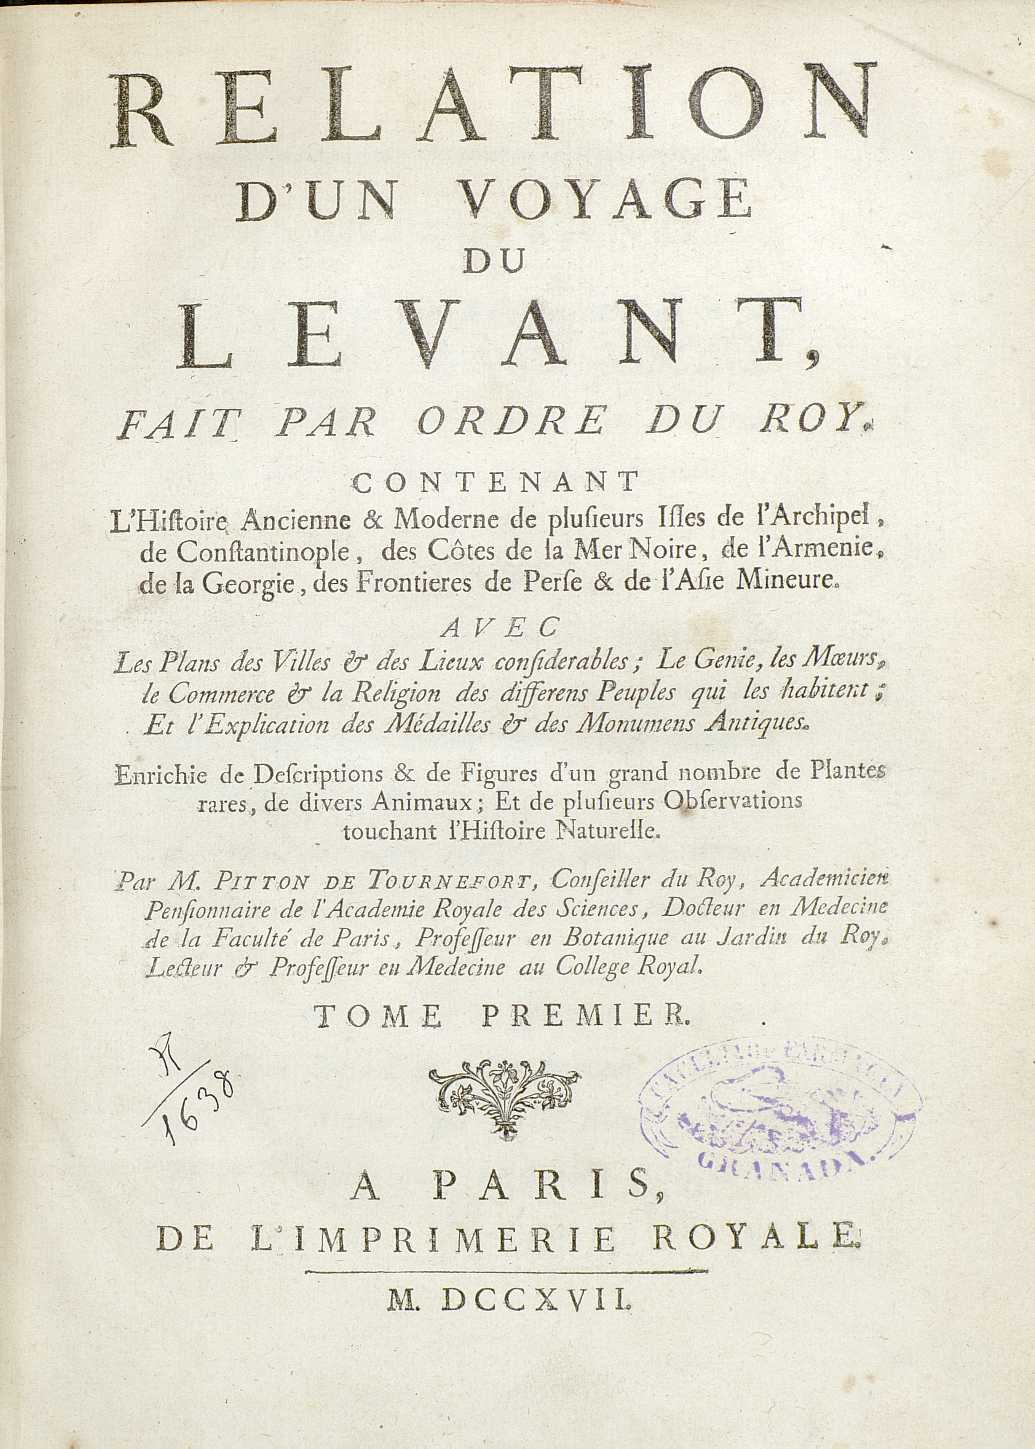 Pitton de Tournefort, Joseph, 1656-1708